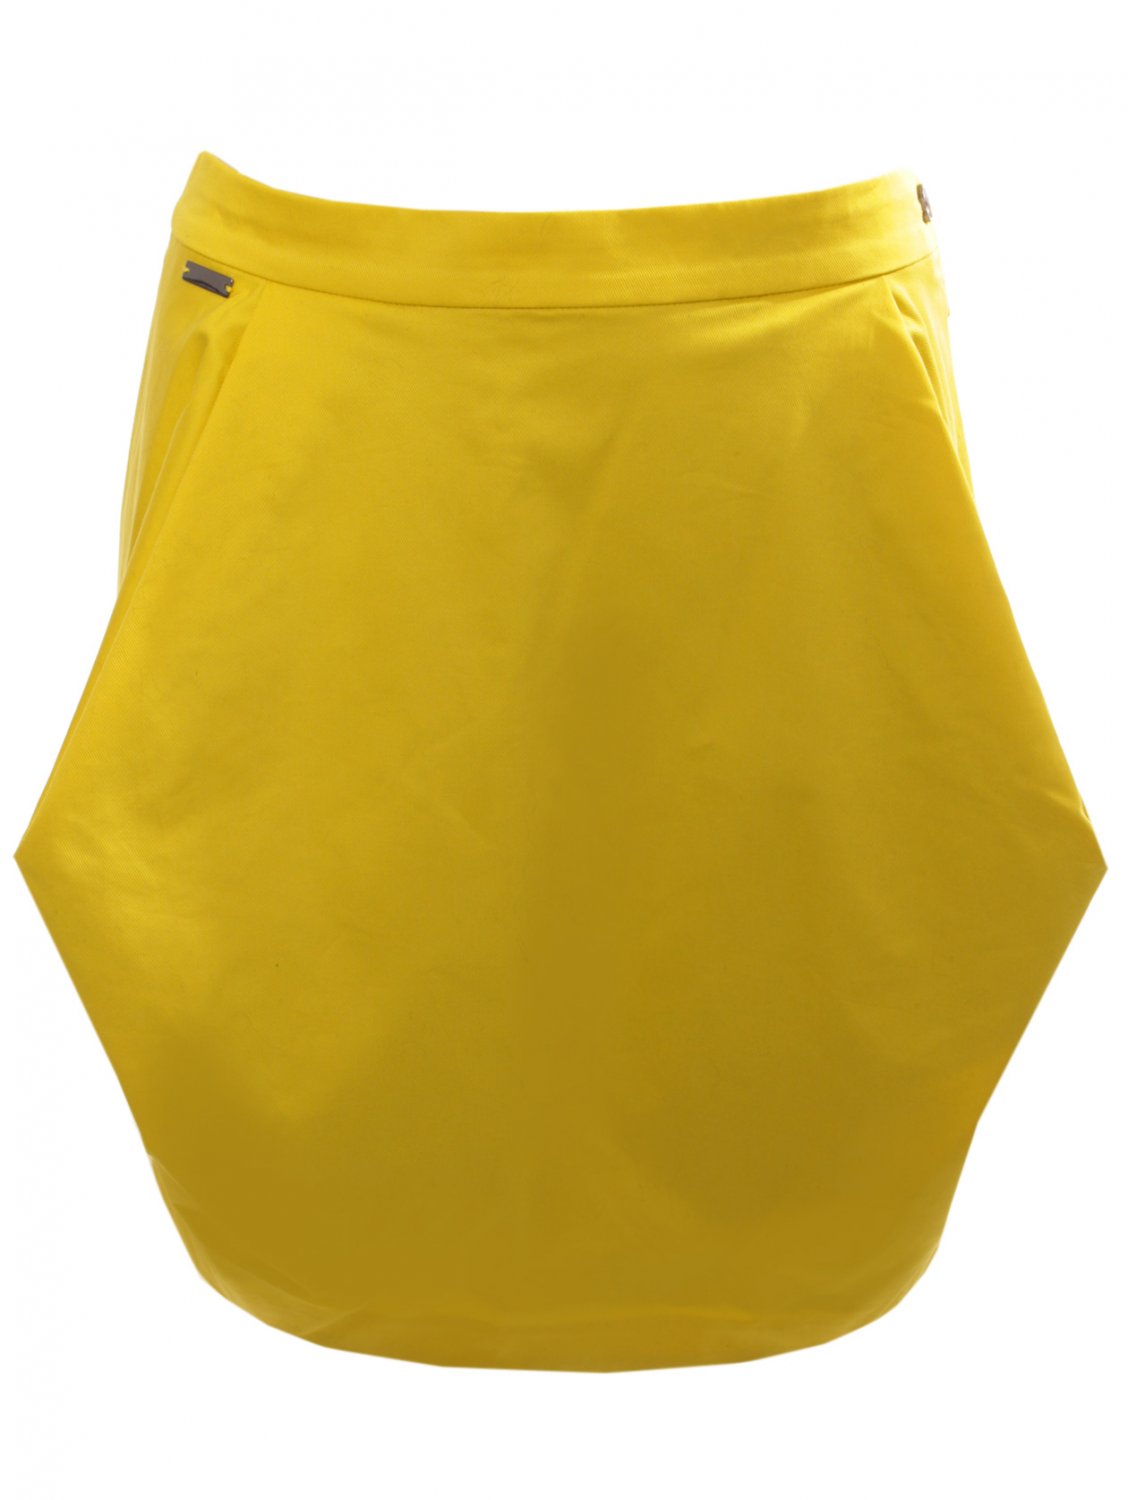 Adidas Slvr Cowl Skirt Bright Mustard Yellow in Yellow (mustard) | Lyst